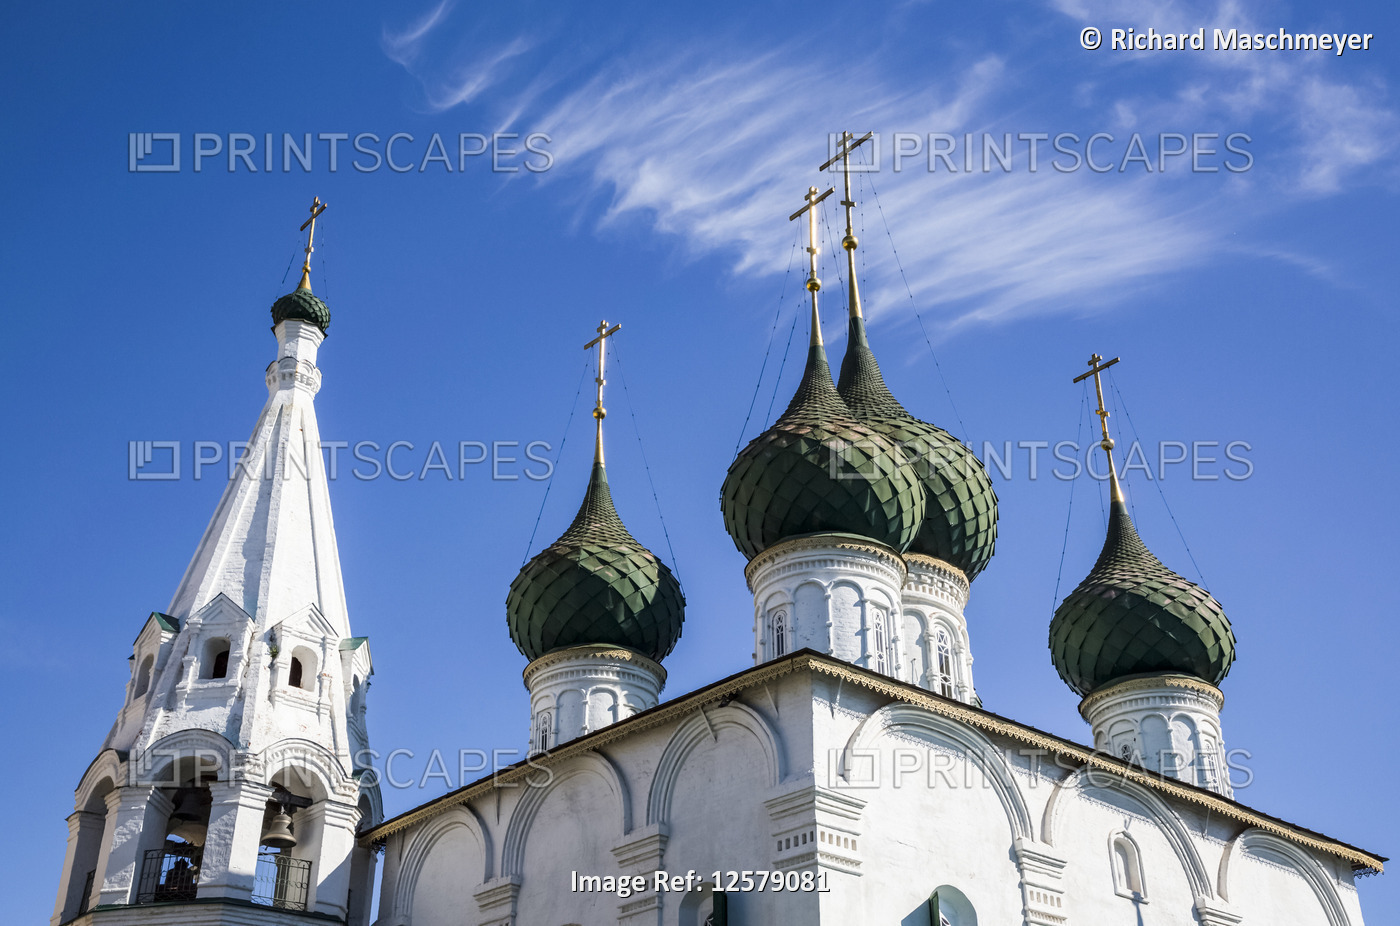 Saviour Church on the City; Yaroslavl, Yaroslavl Oblast, Russia